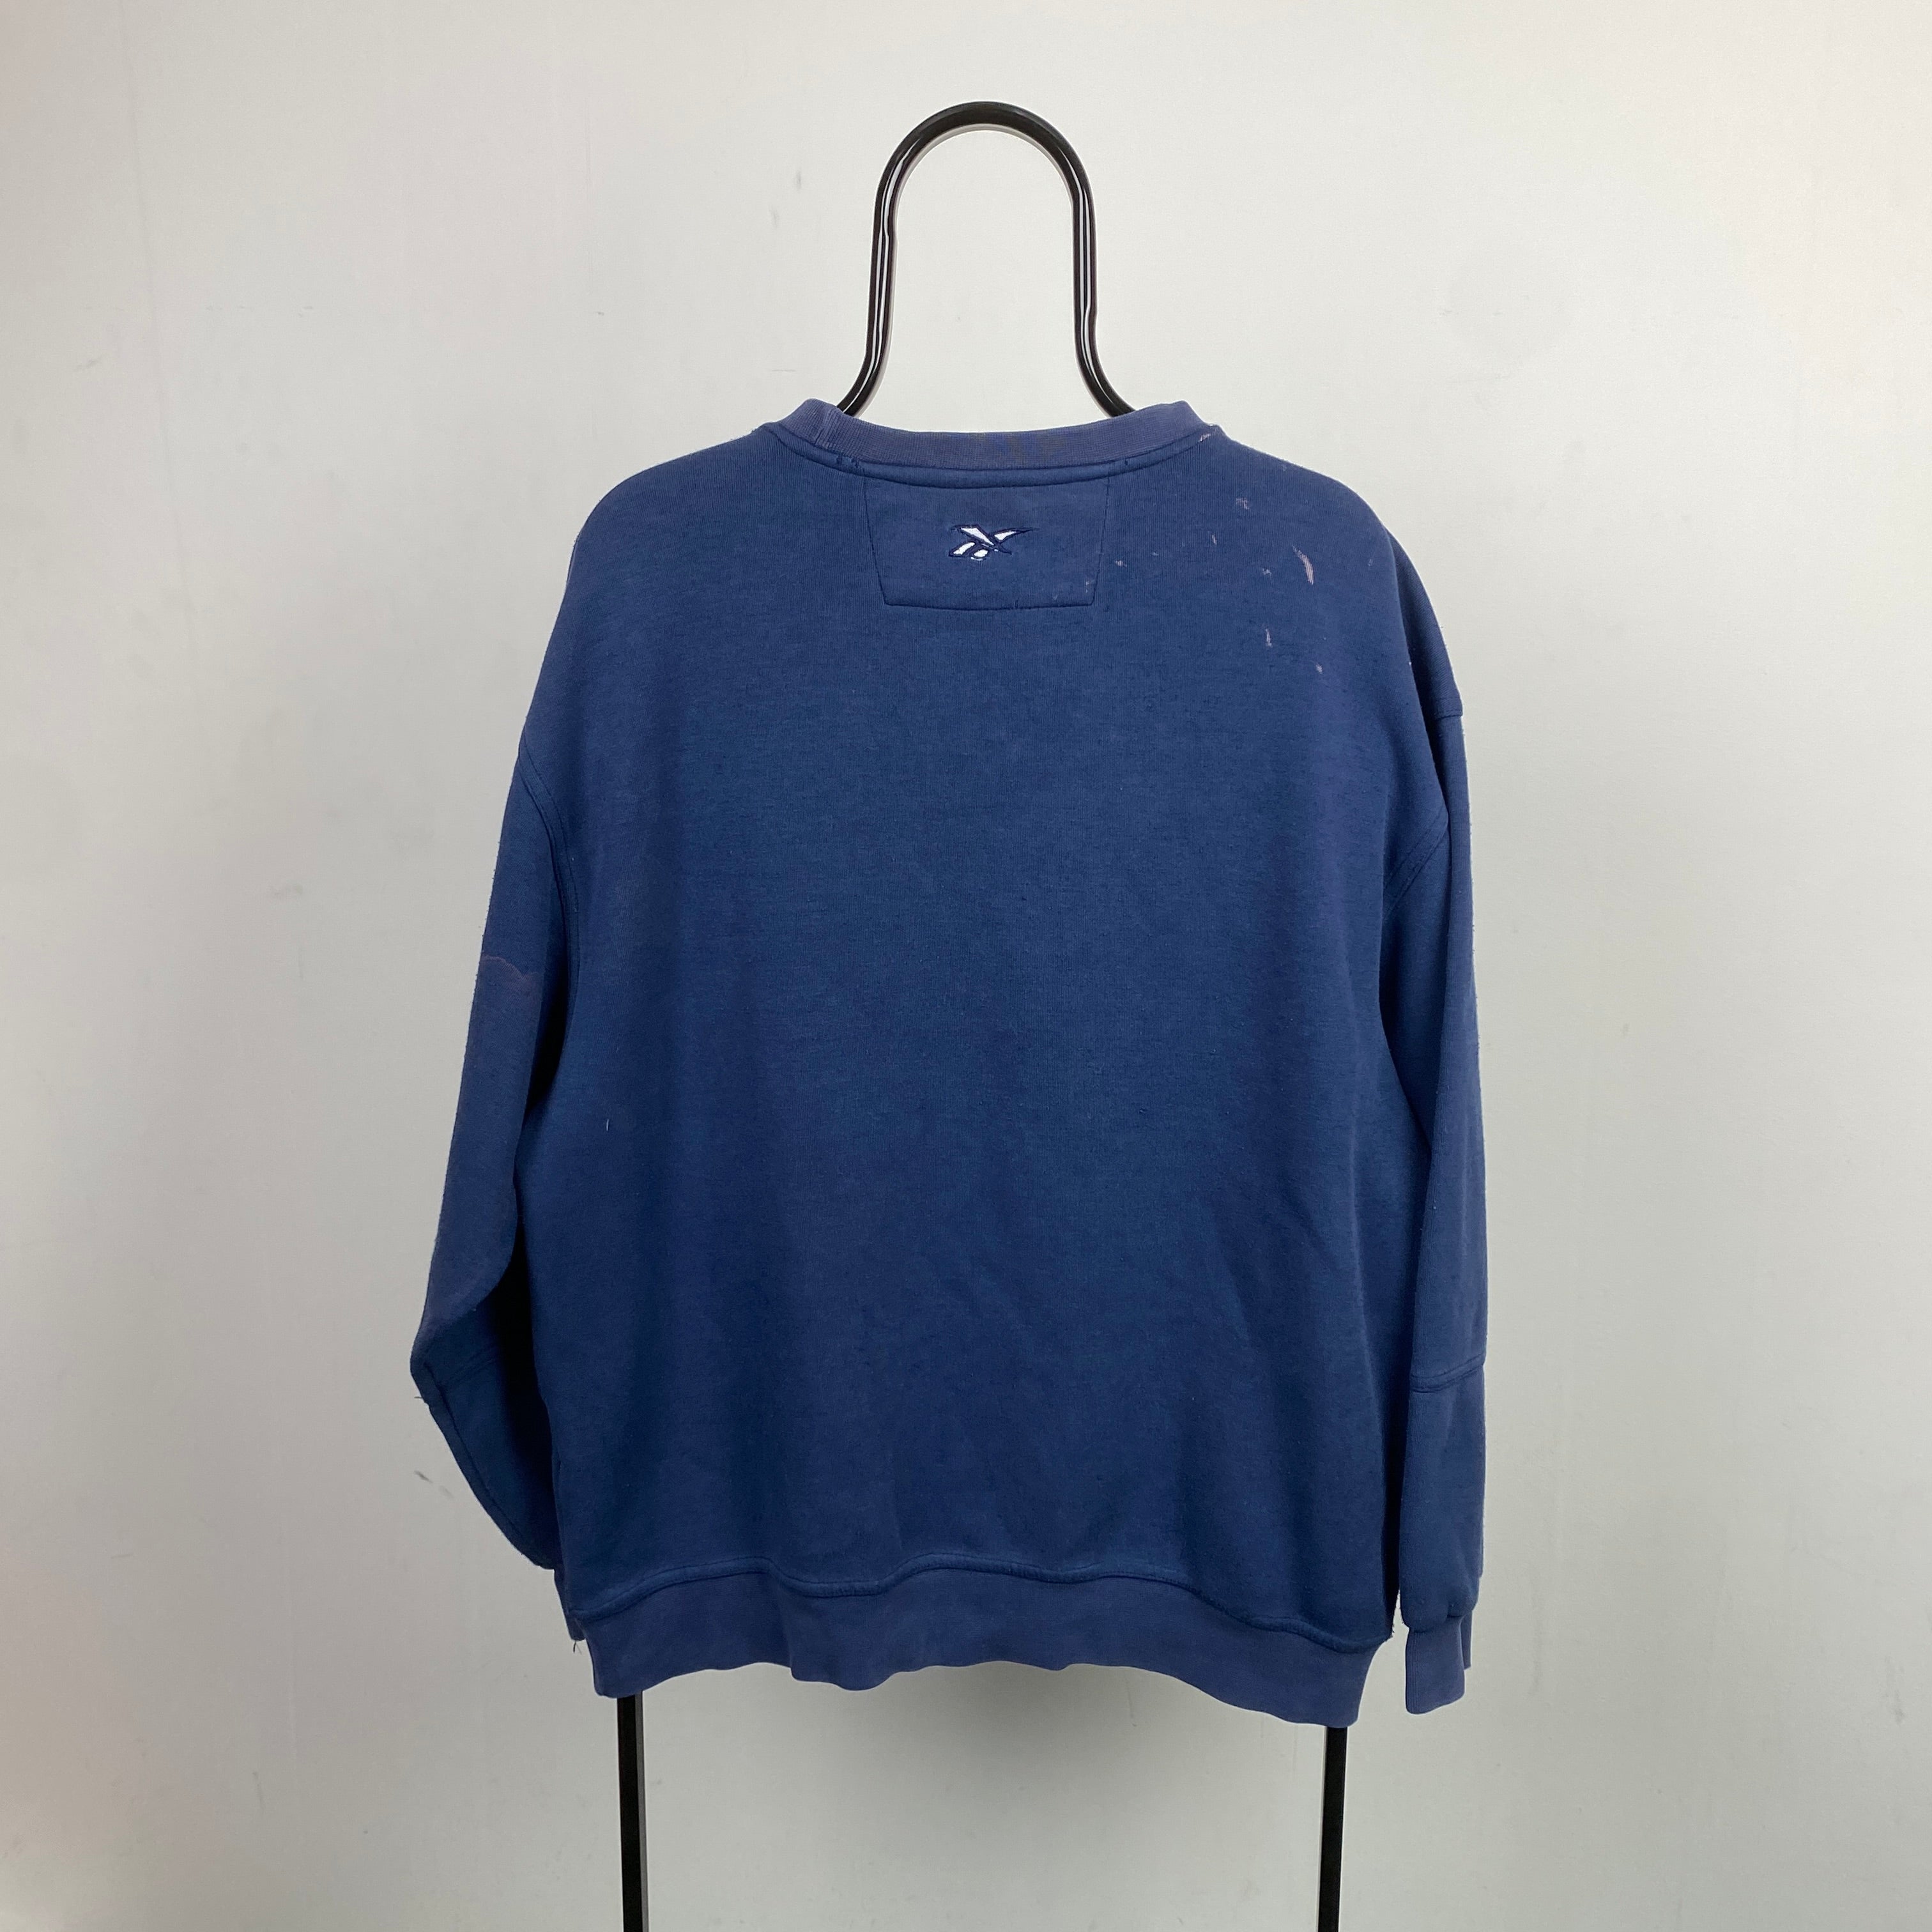 Retro Reebok Sweatshirt Blue XL